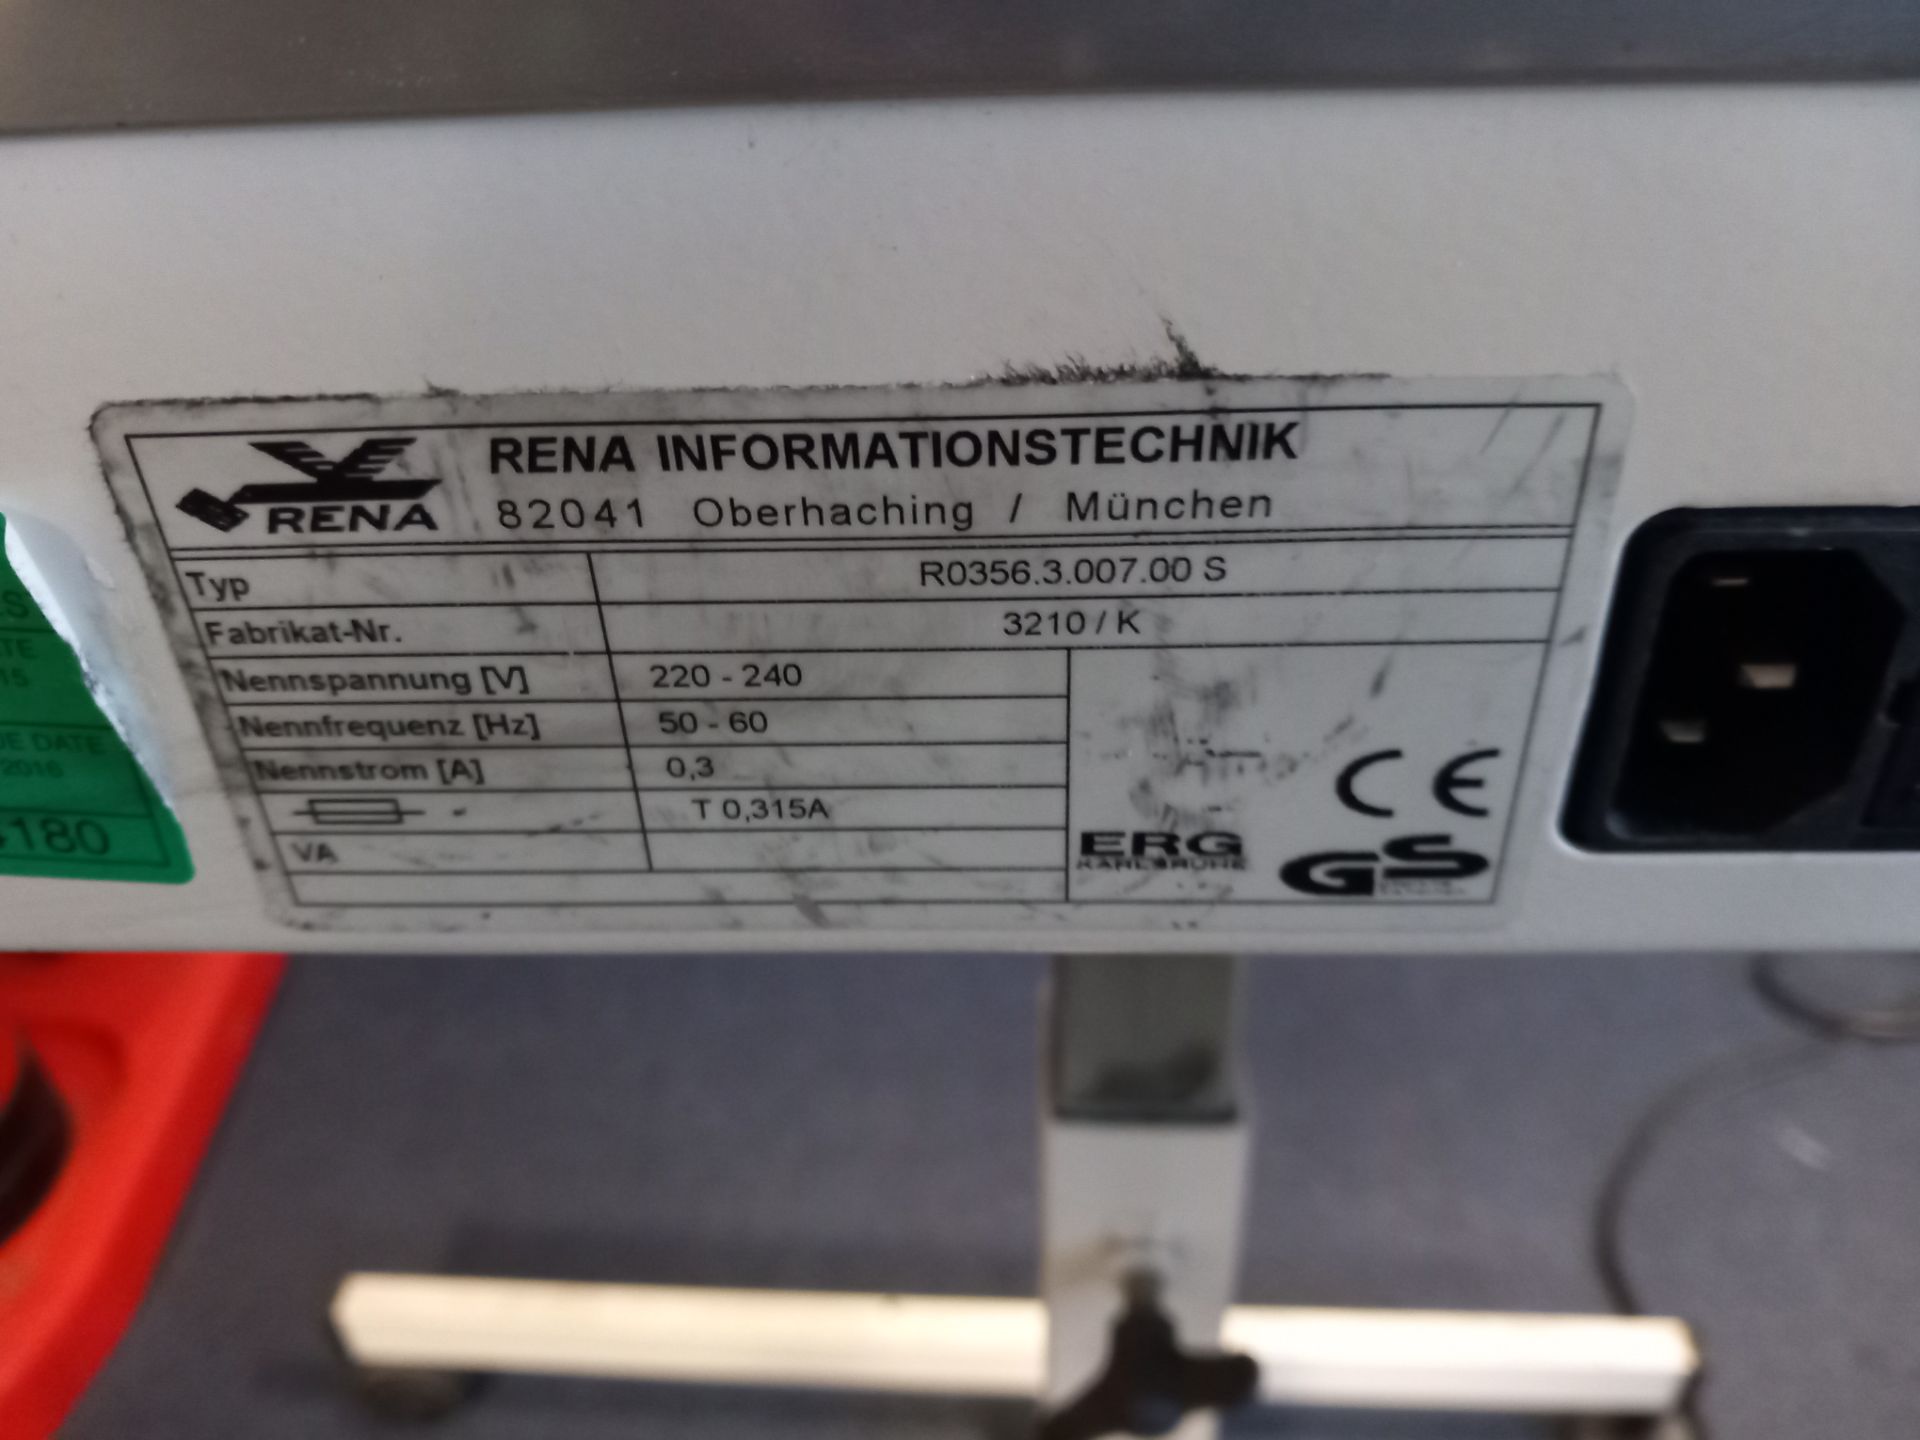 Rena RO3563.007.005 conveyor - Image 2 of 2